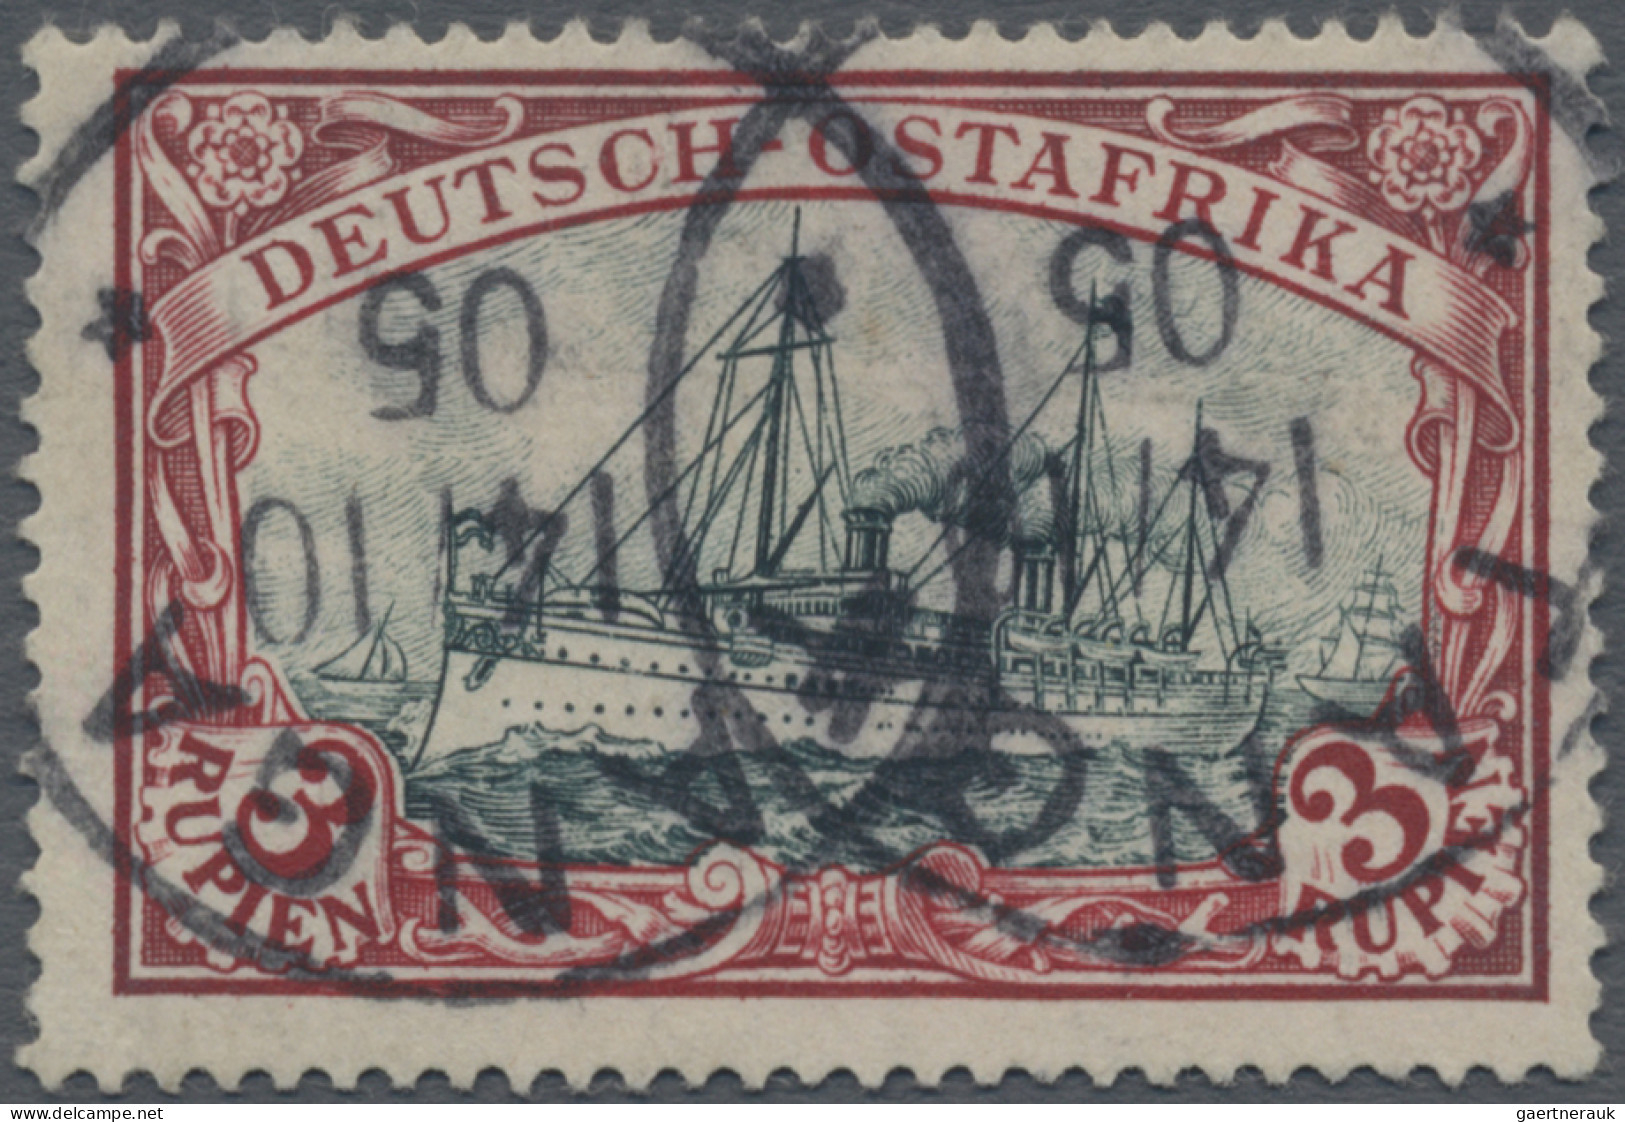 Deutsch-Ostafrika: 1901, Schiff, 3 R. Dunkelkarminrot/grünschwarz, Sauber Gestem - África Oriental Alemana